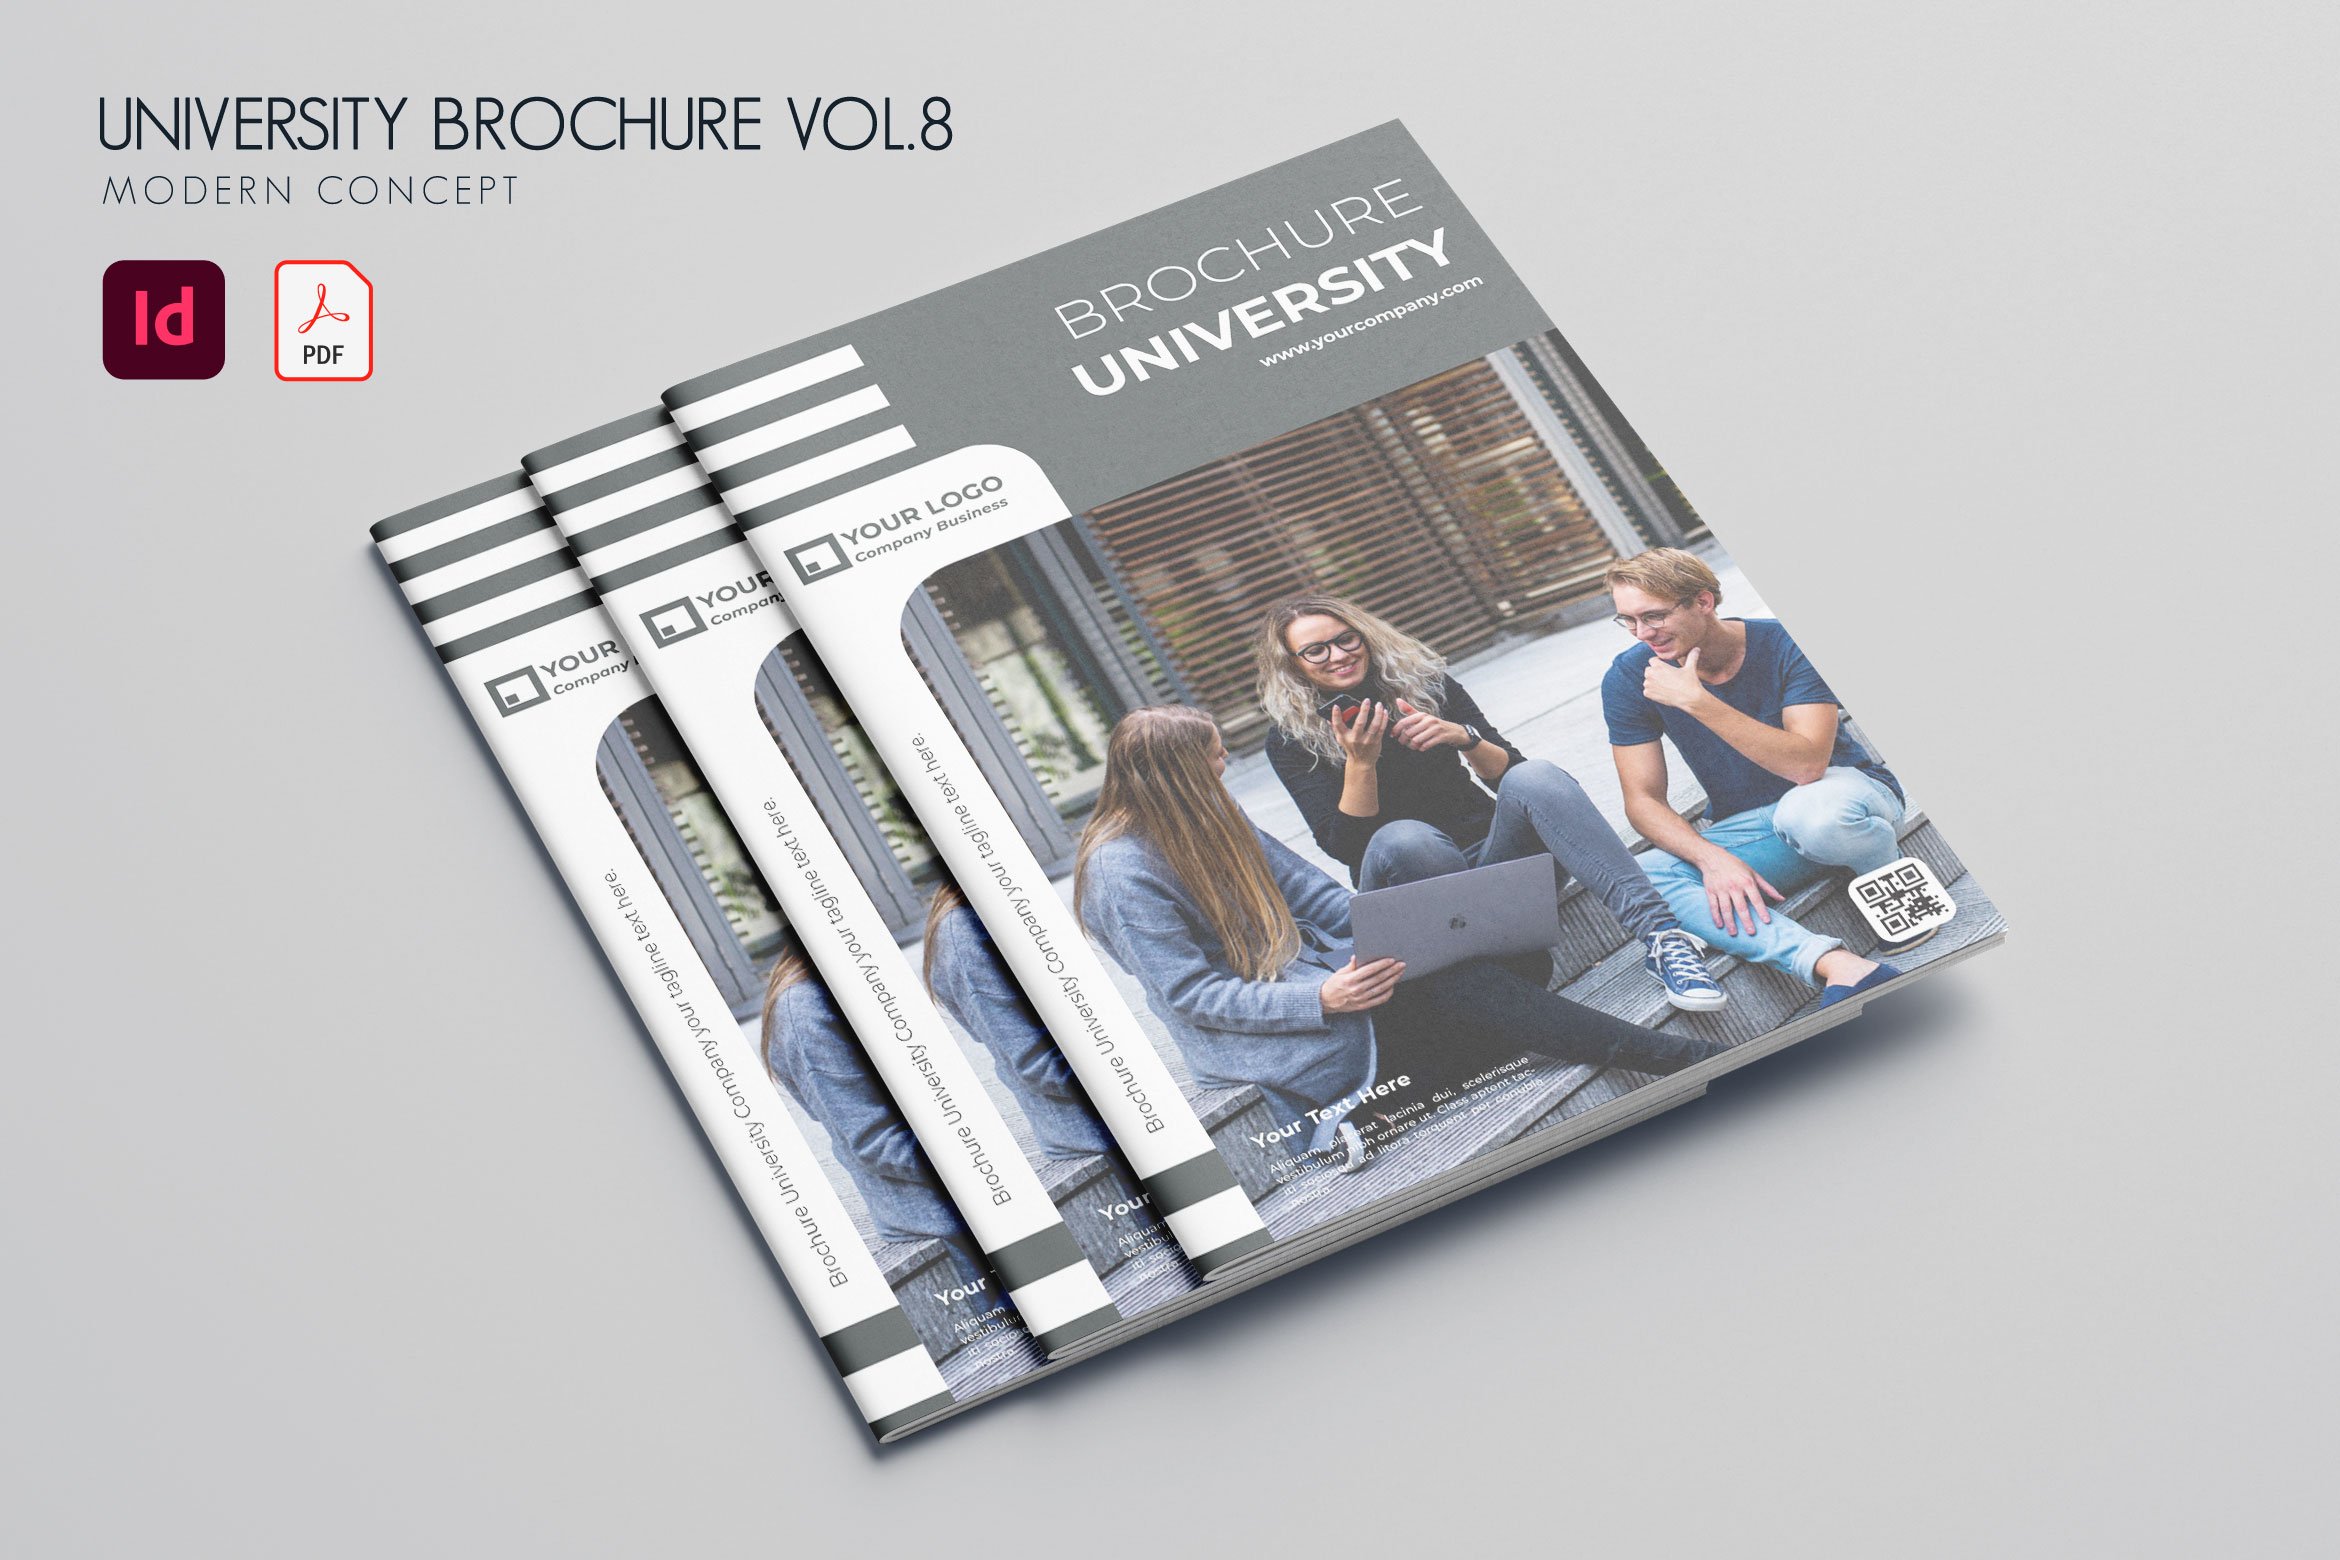 University Brochure Vol.8 cover image.